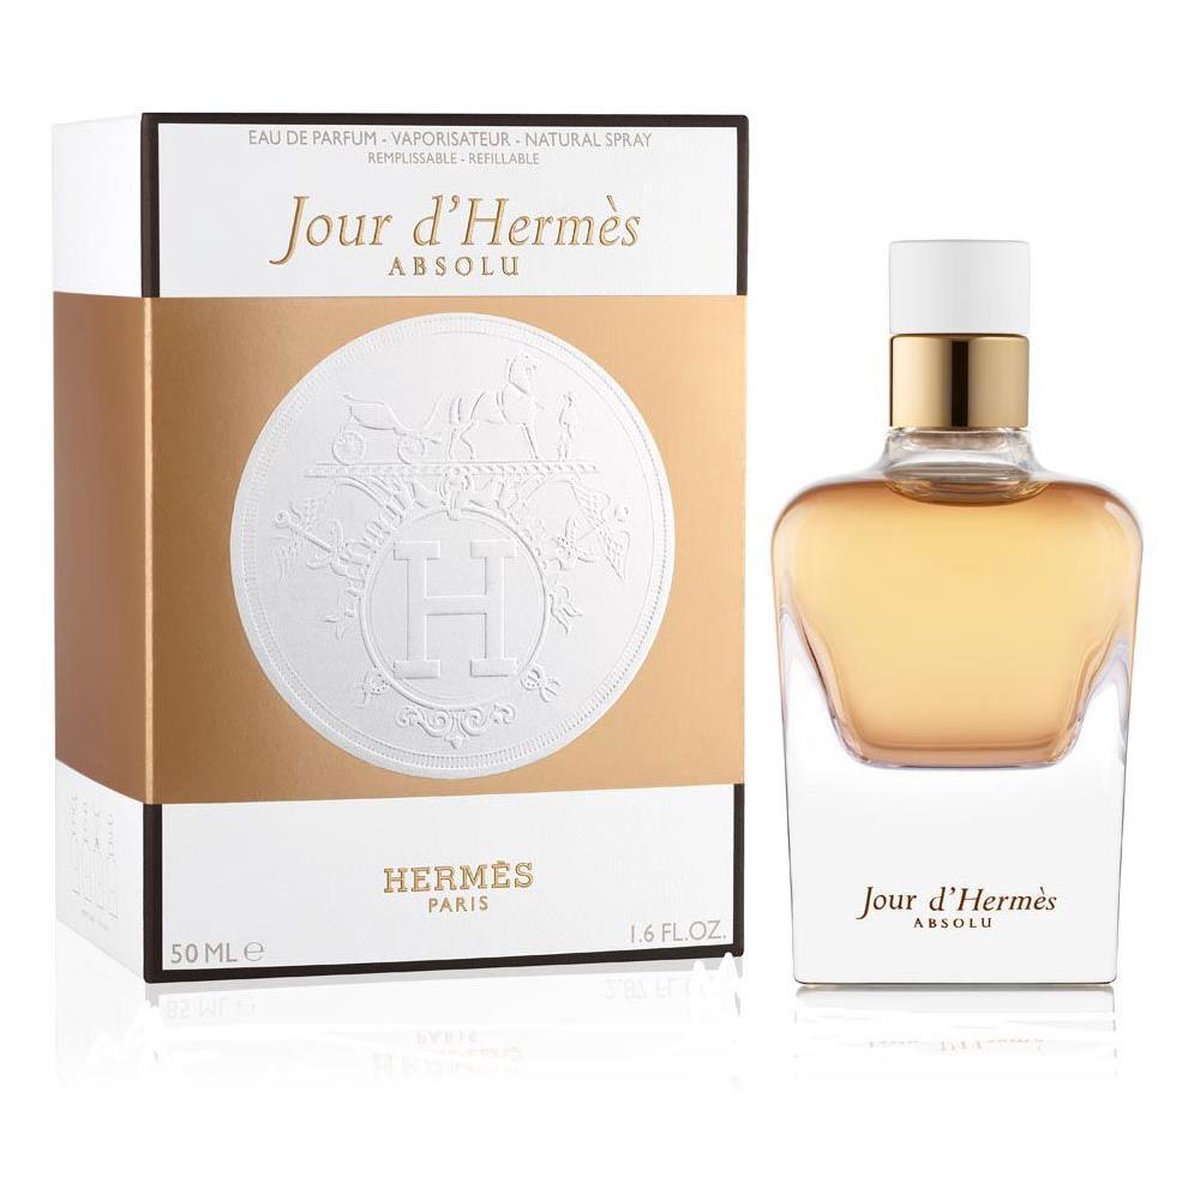 Hermes Terre Jour D'Hermes Absolu Eau de Parfum Spray 50 ml